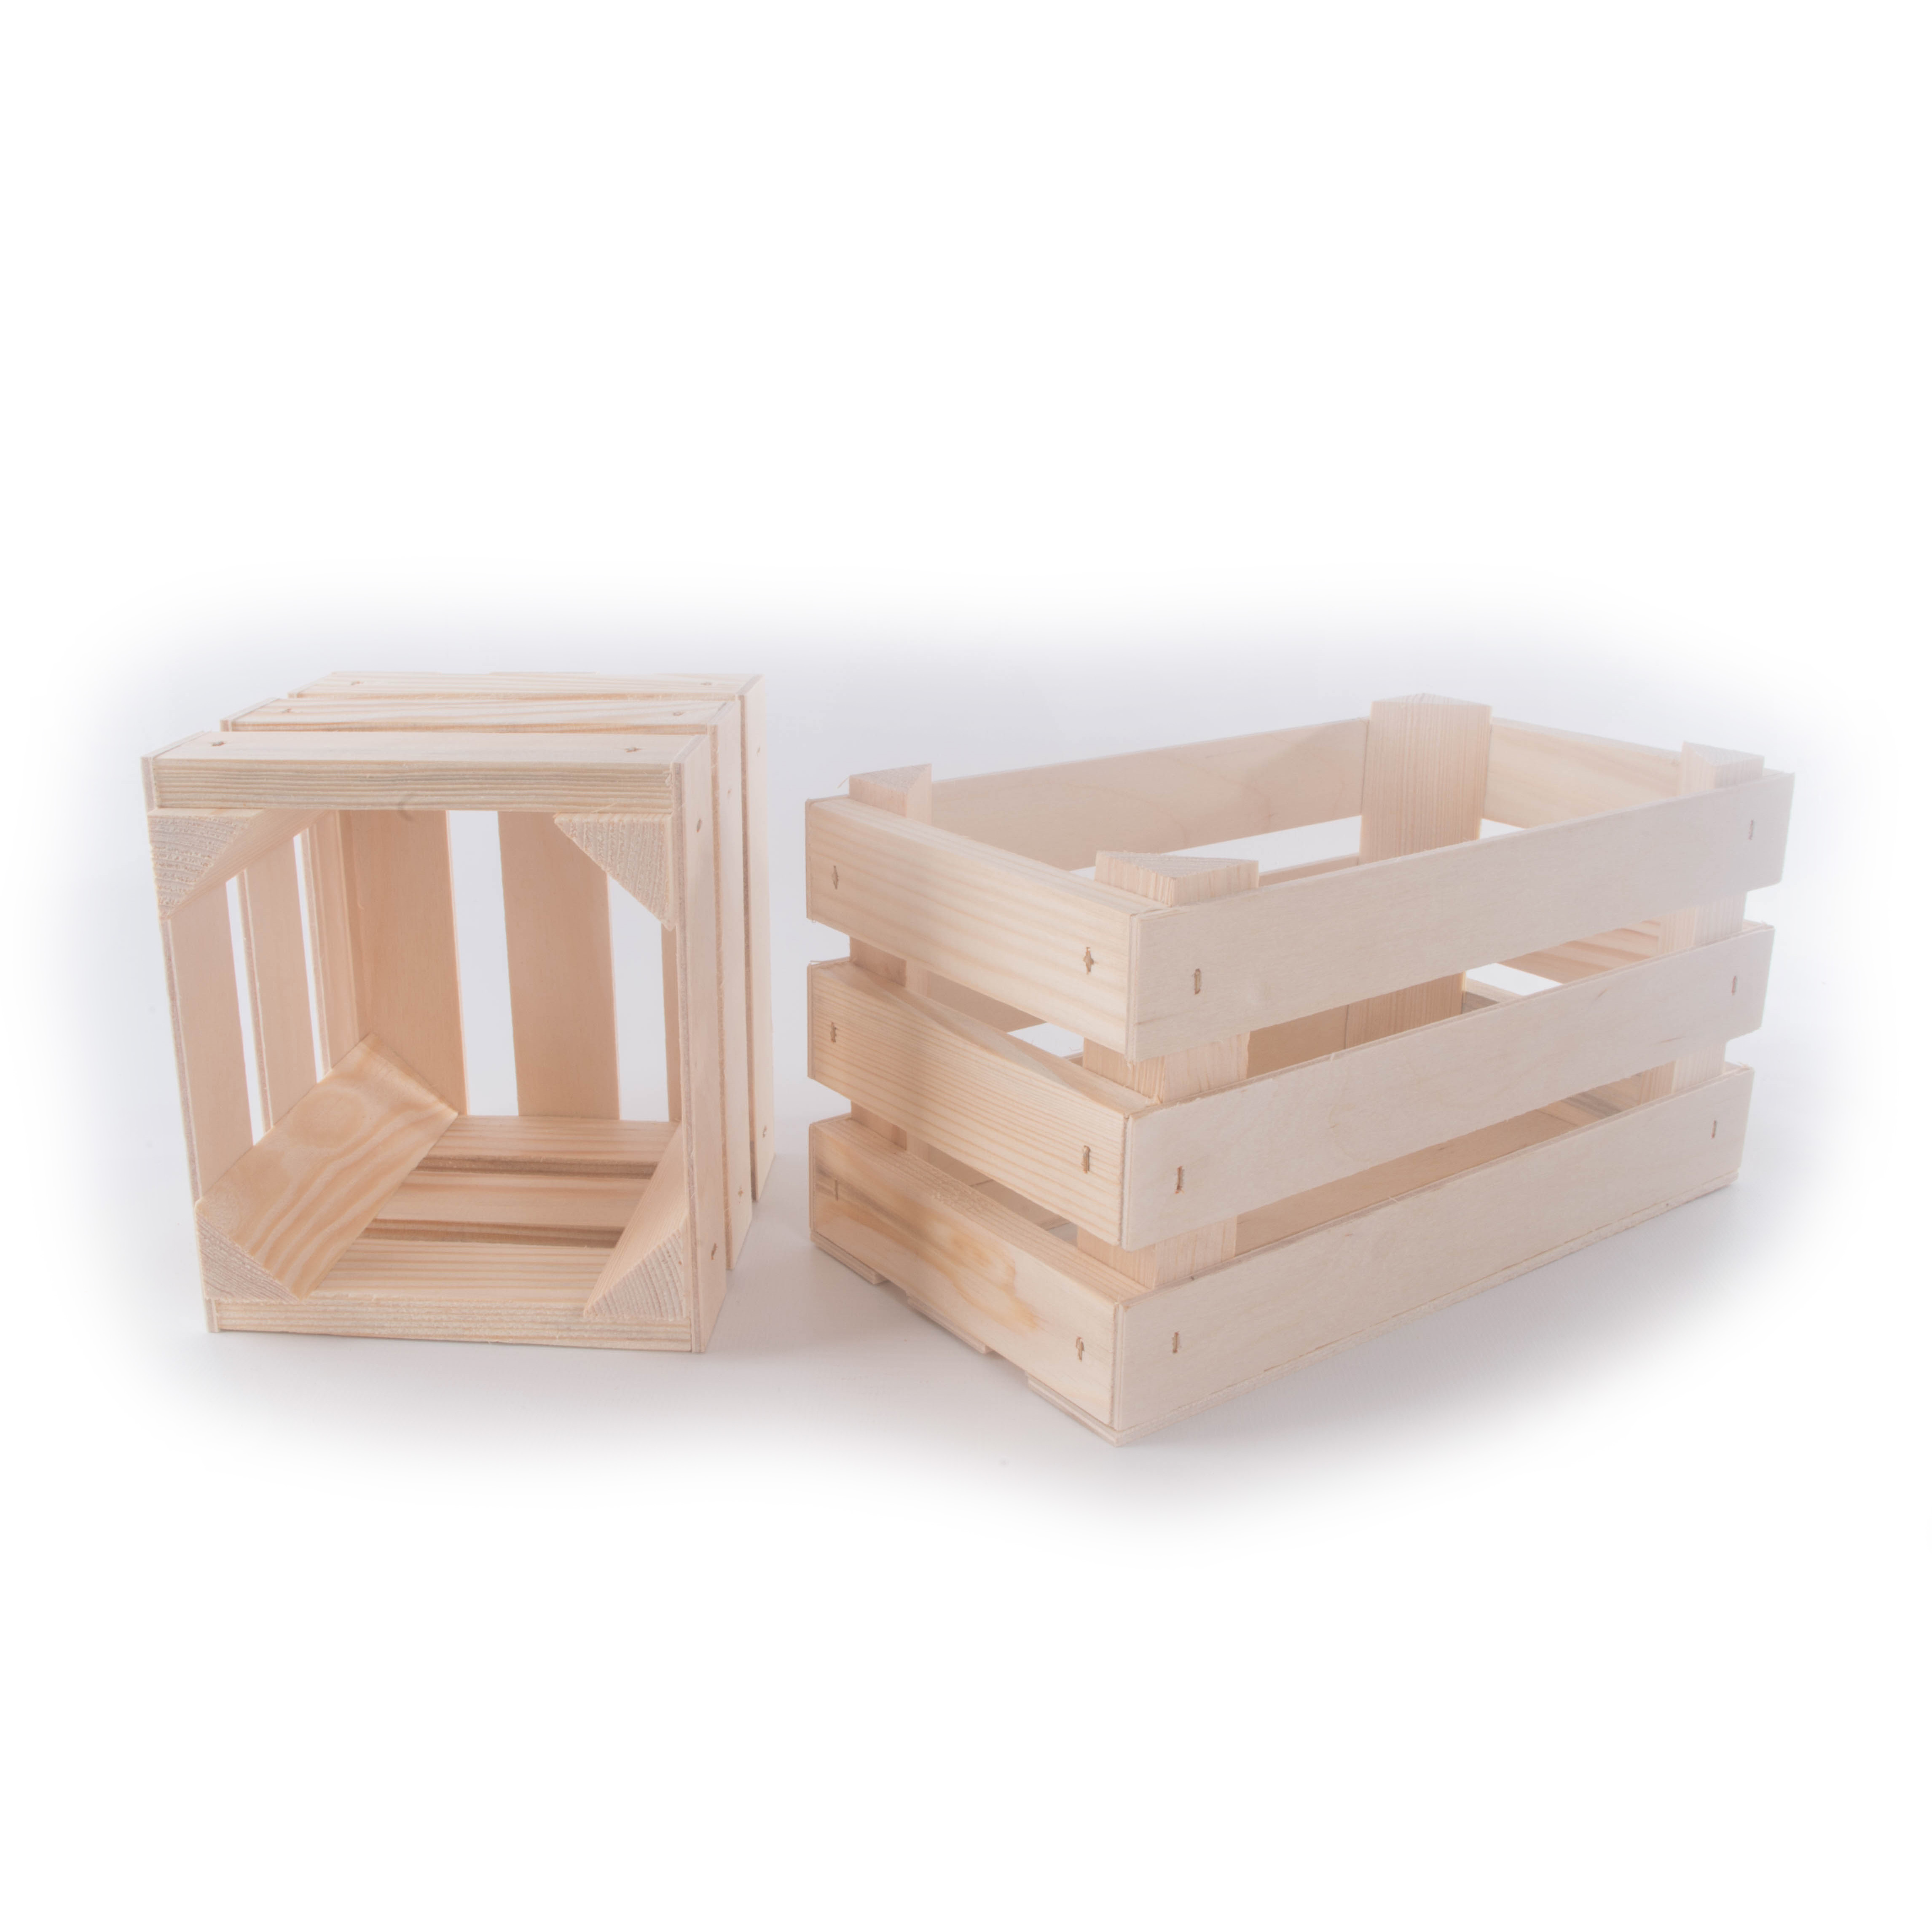 Small Wooden Crates Square Or Rectangular Display Shelf Retail Box Craft Diy Ebay